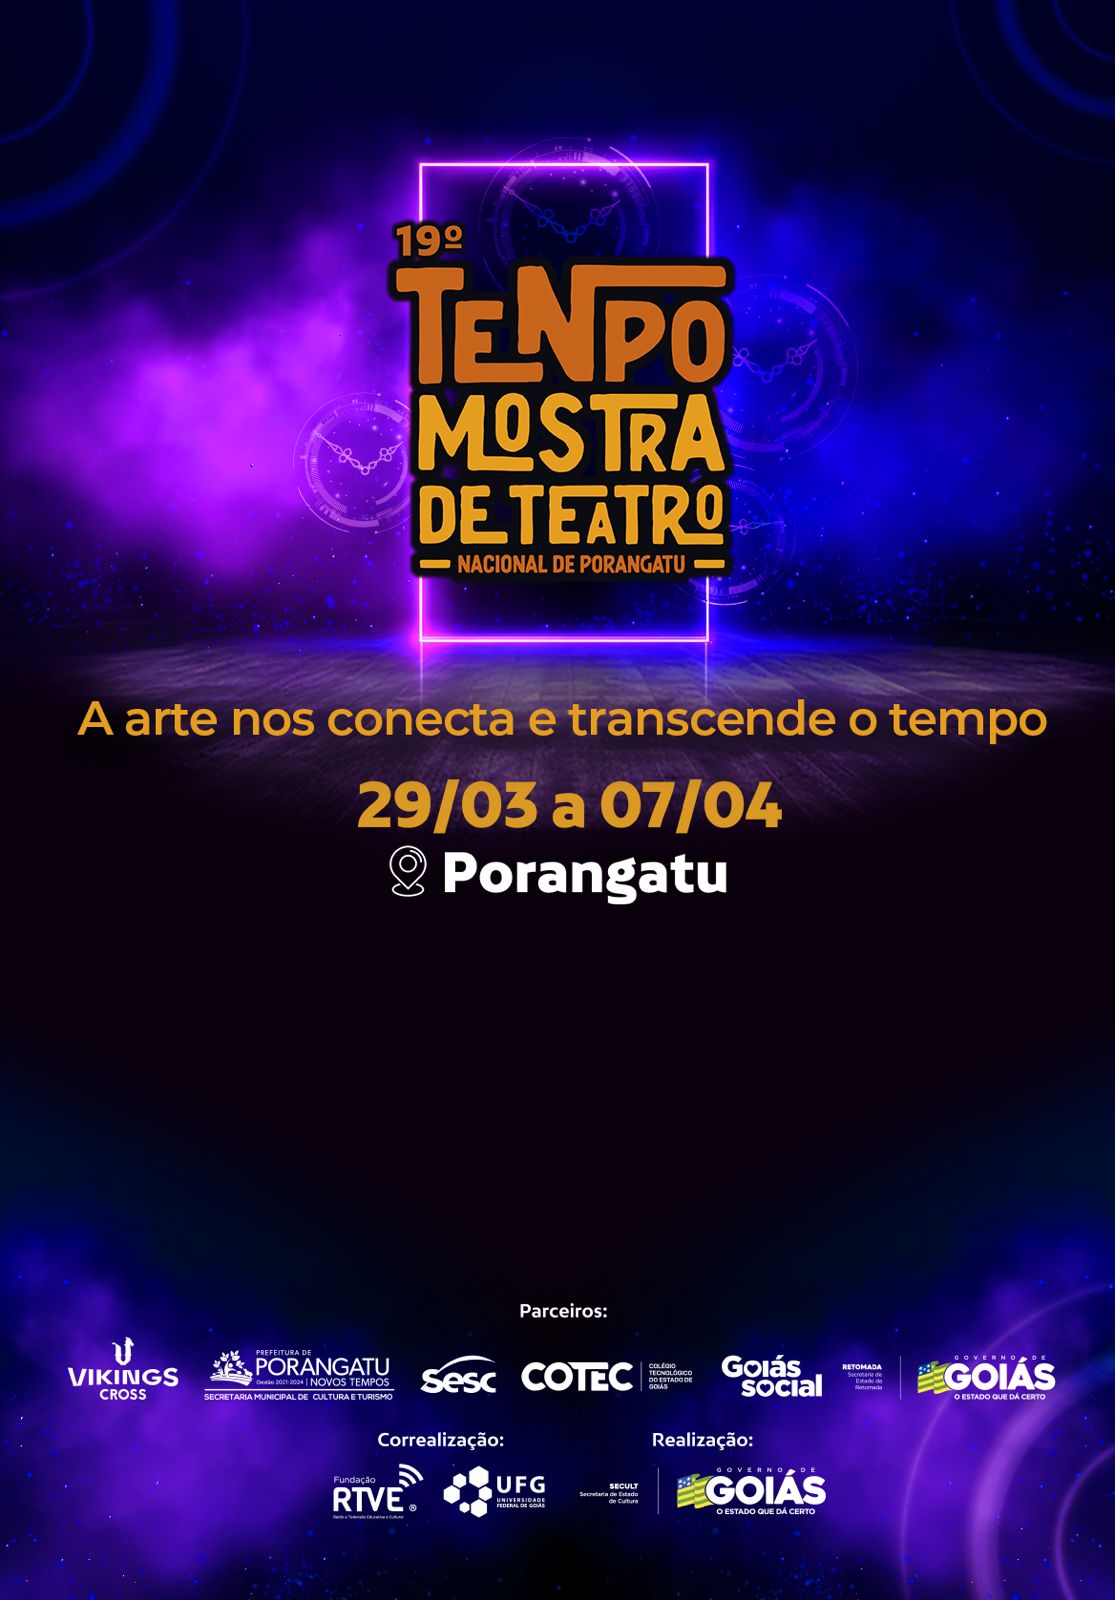 TeNpo - Mostra de Teatro Nacional de Porangatu